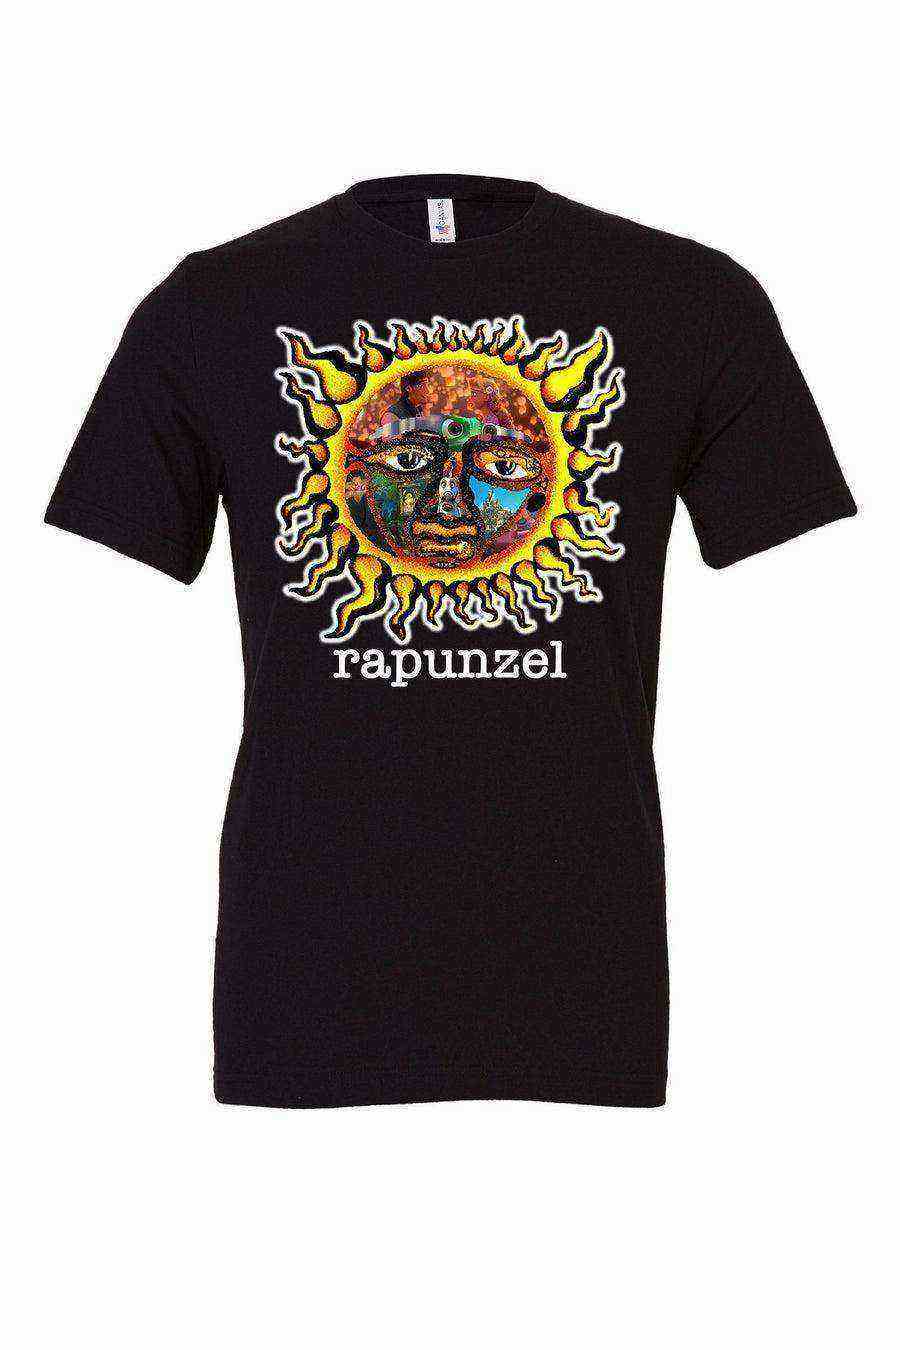 Youth | Rapunzel Band Shirt | Tangled Sun Shirt - Dylan's Tees